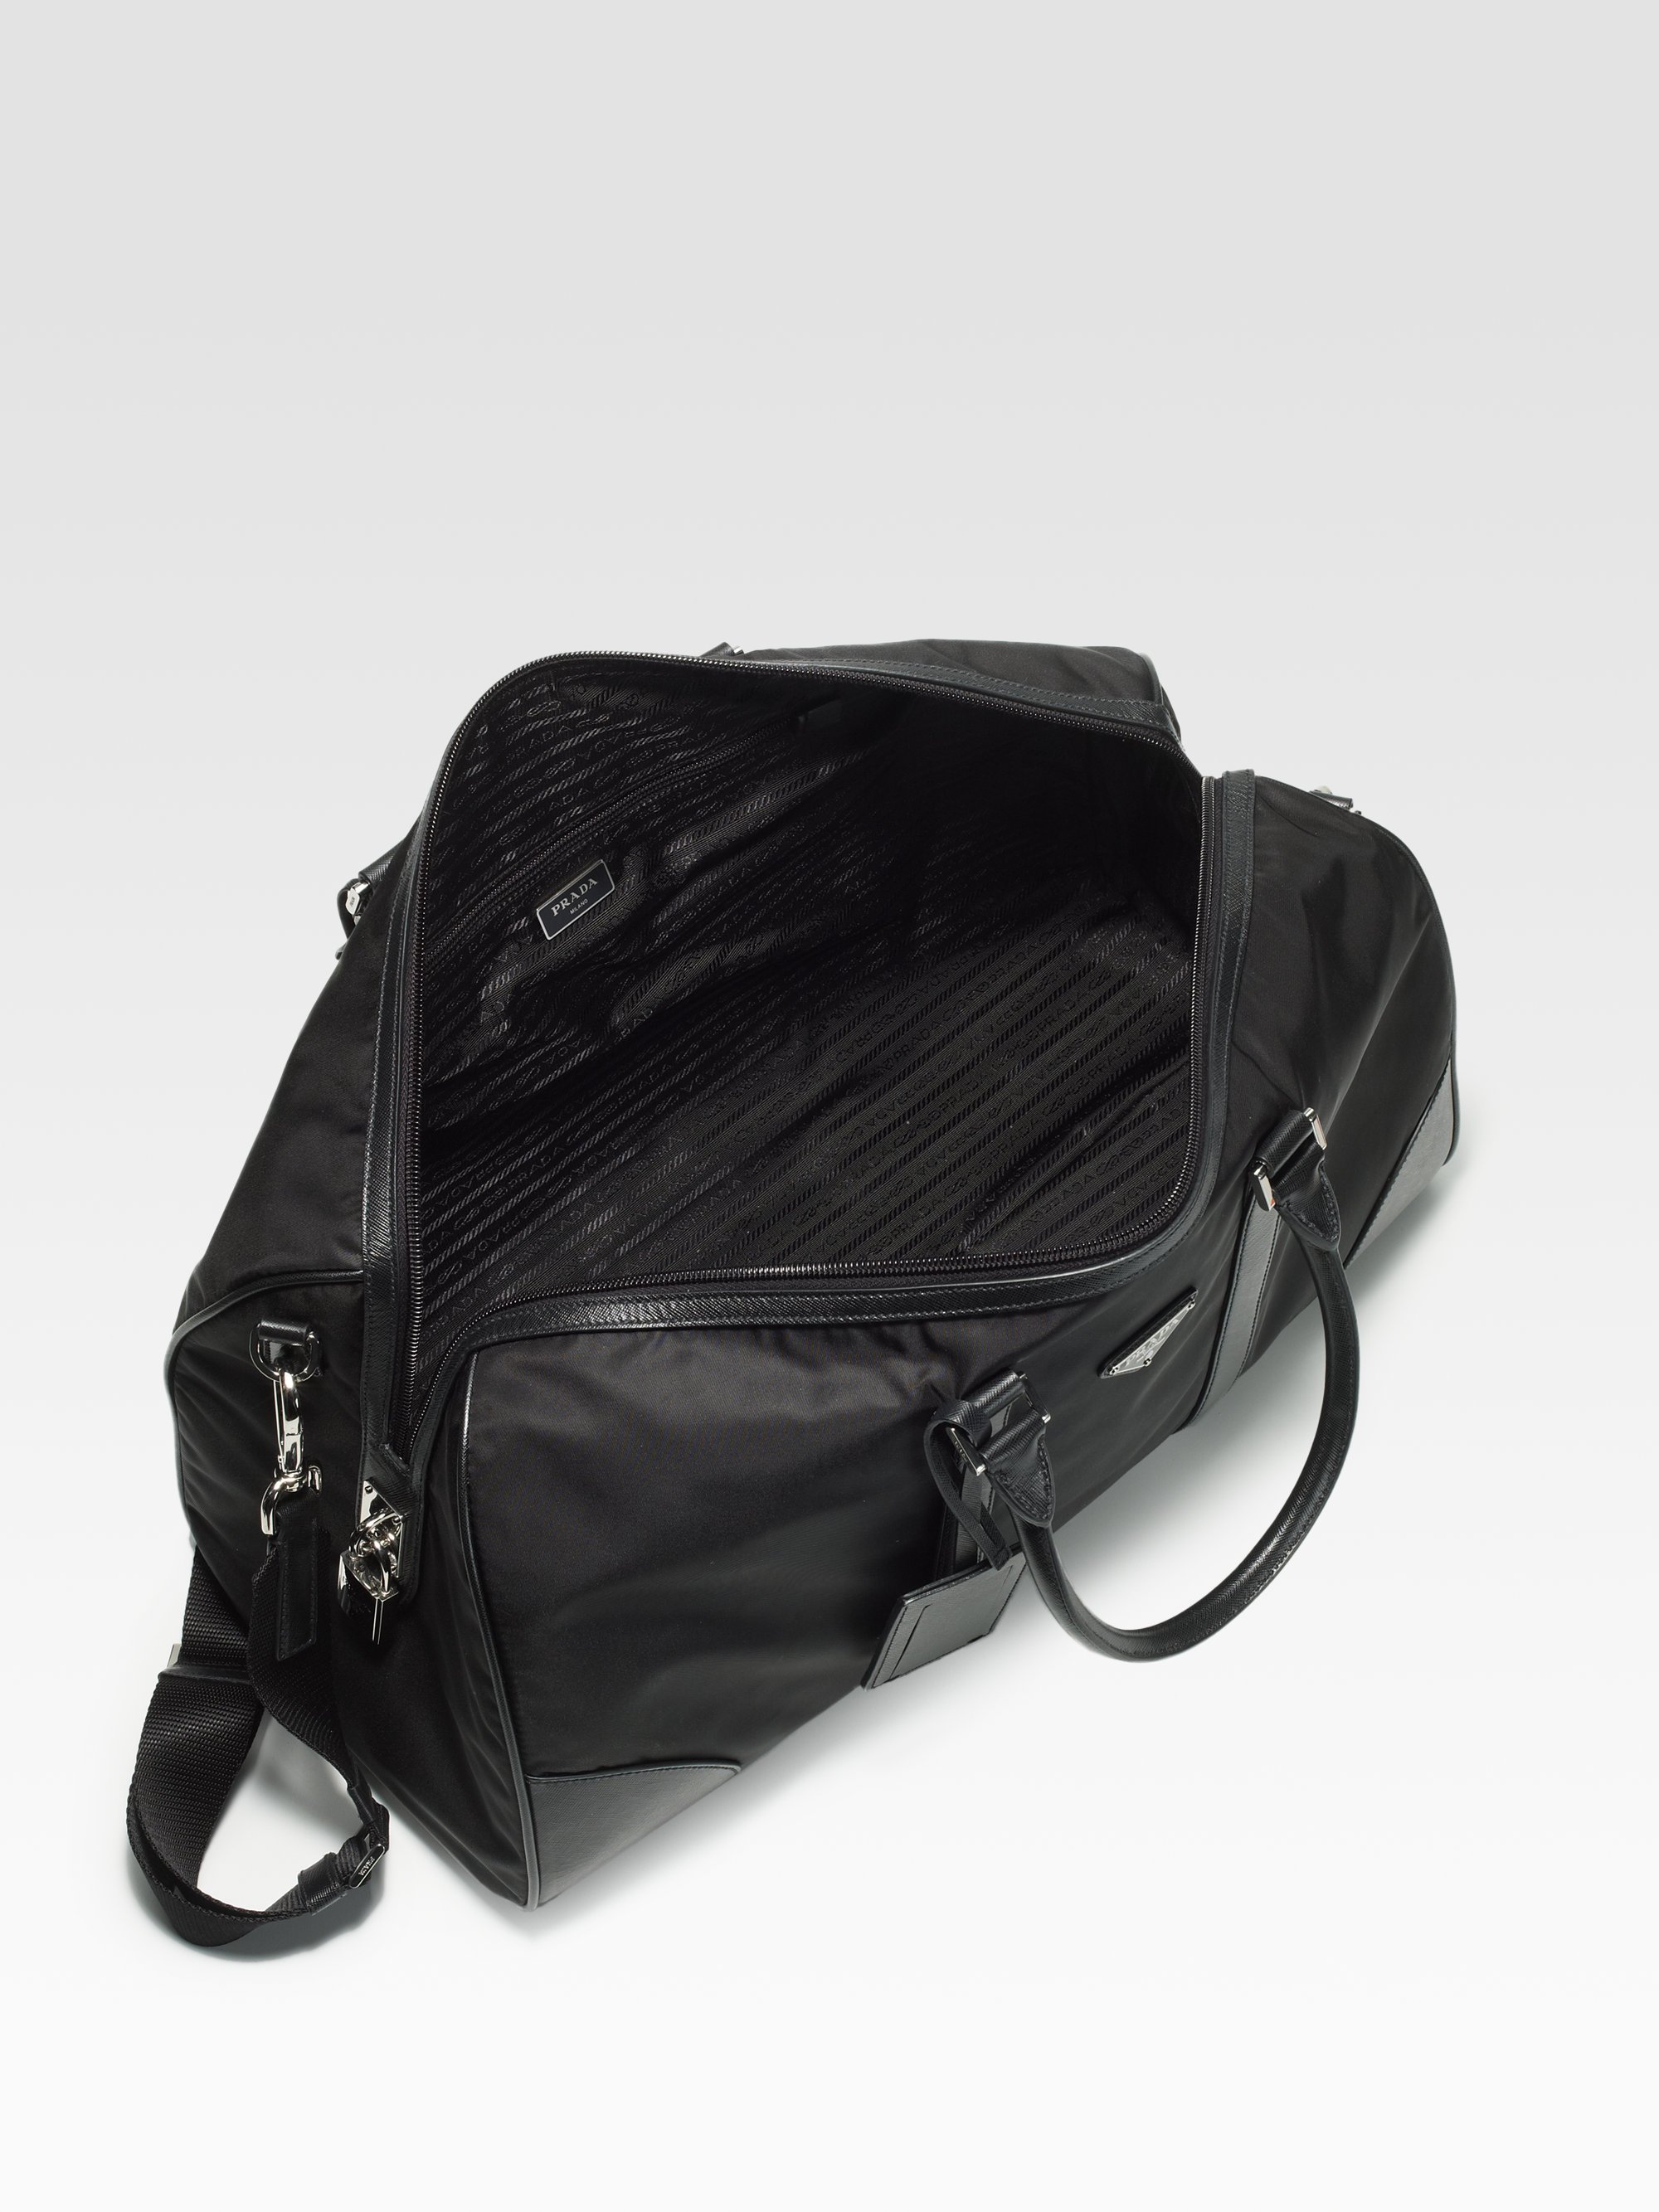 Lyst - Prada Nylon Duffel Bag in Black for Men